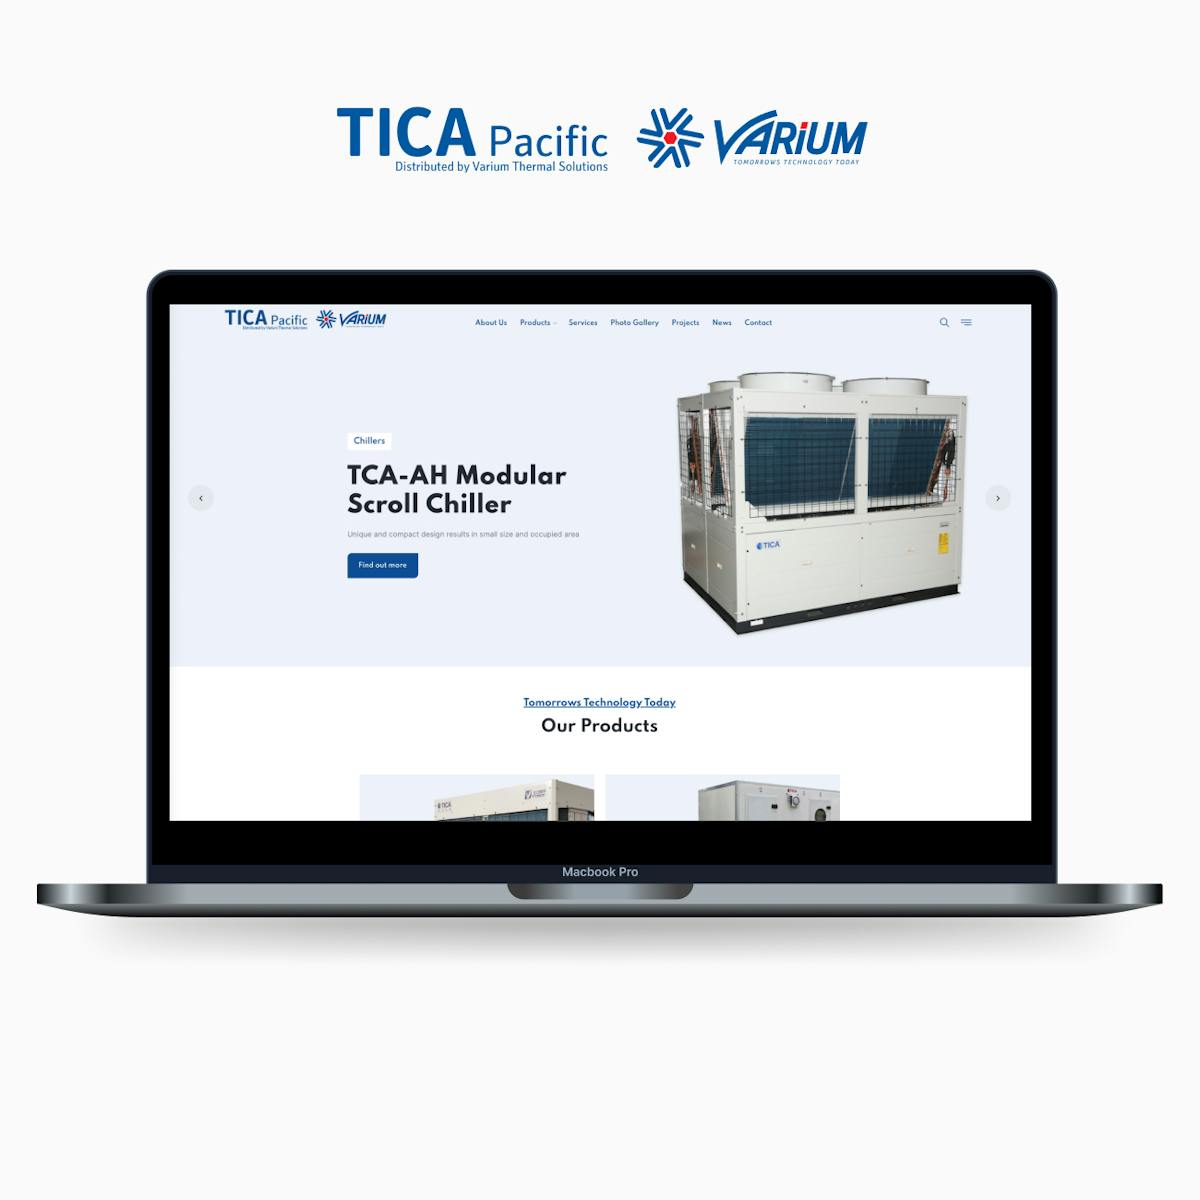 Tica Pacific - Template WordPress Website by Freelance Web Developer WebKingdom in Sutherland Shire